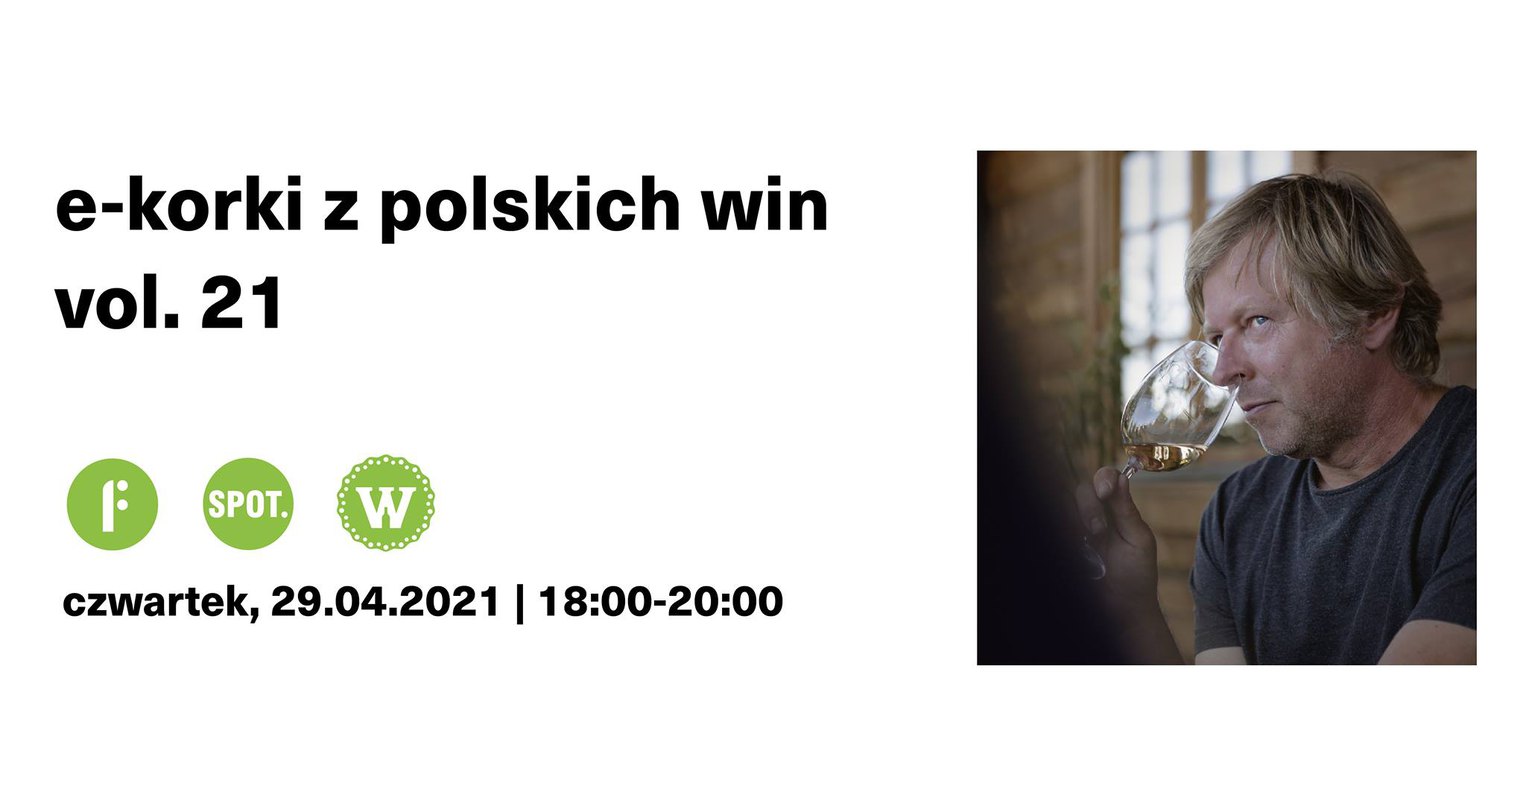 E-korki z polskich win vol. 21